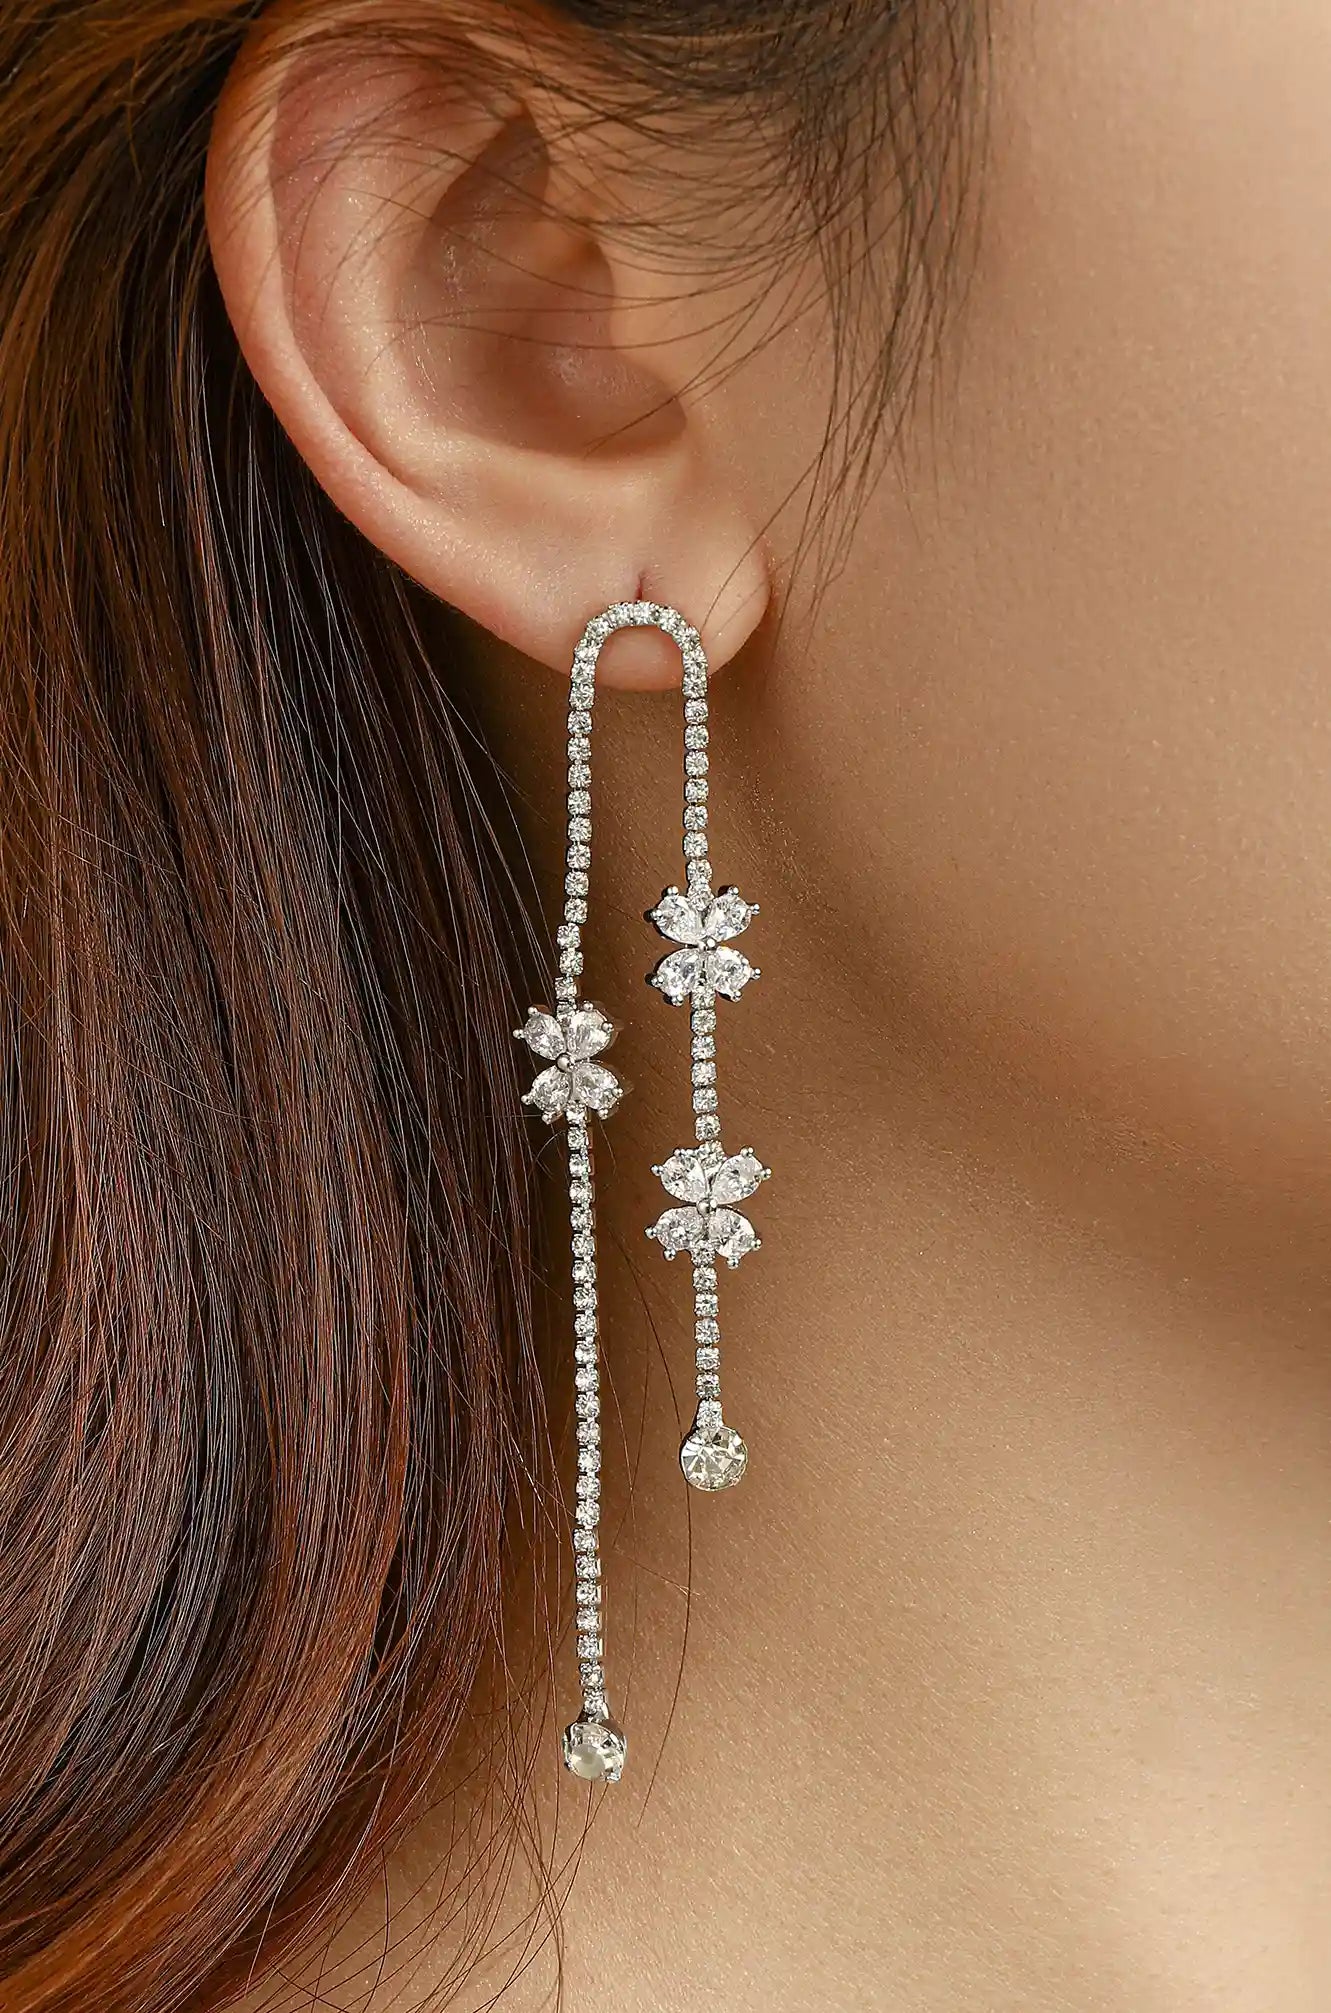 Dangling Bowknot Crystal Earrings